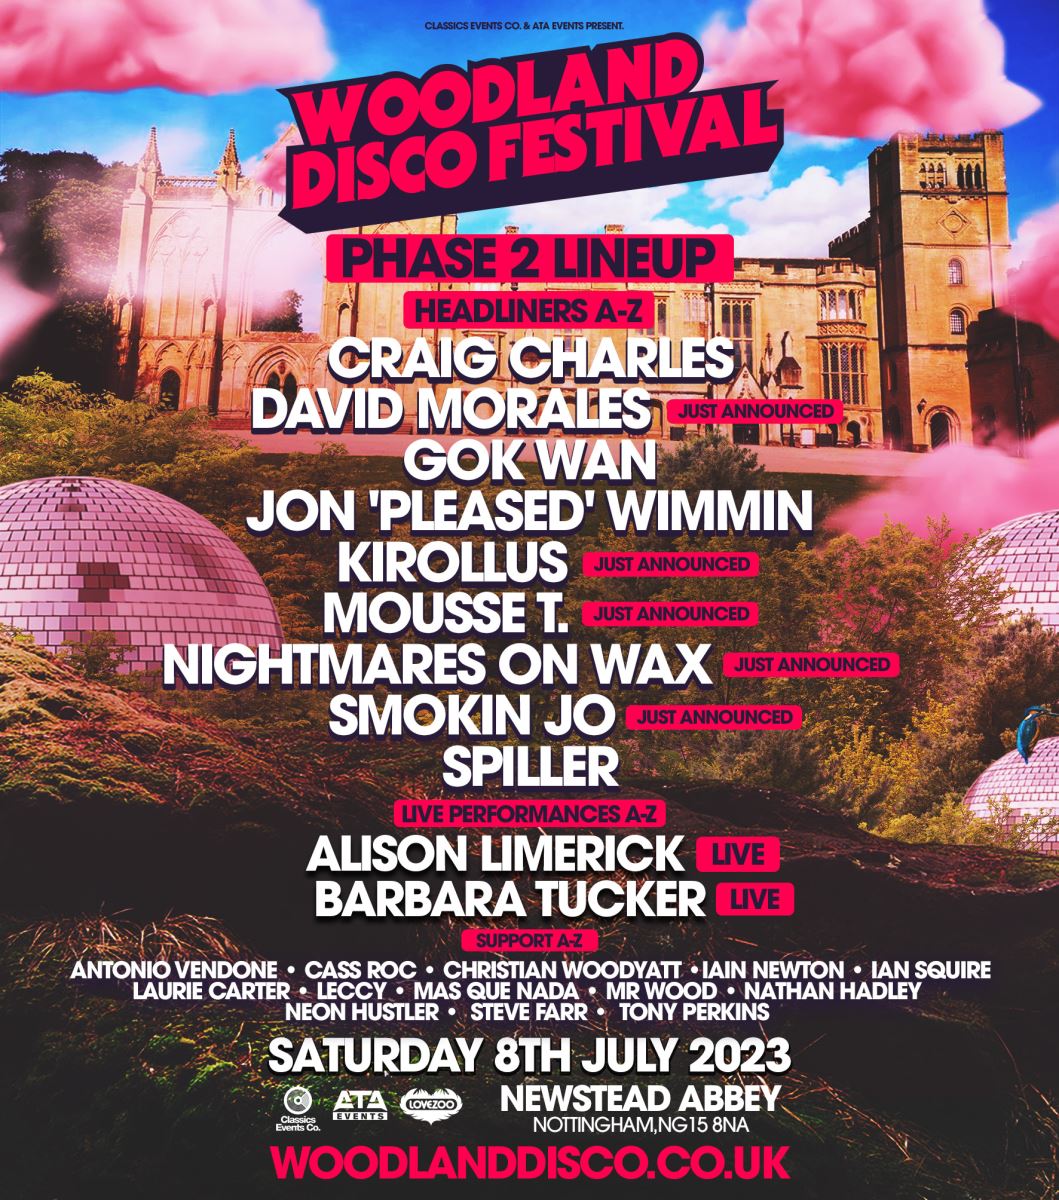 Woodland Disco Festival Visit Nottinghamshire